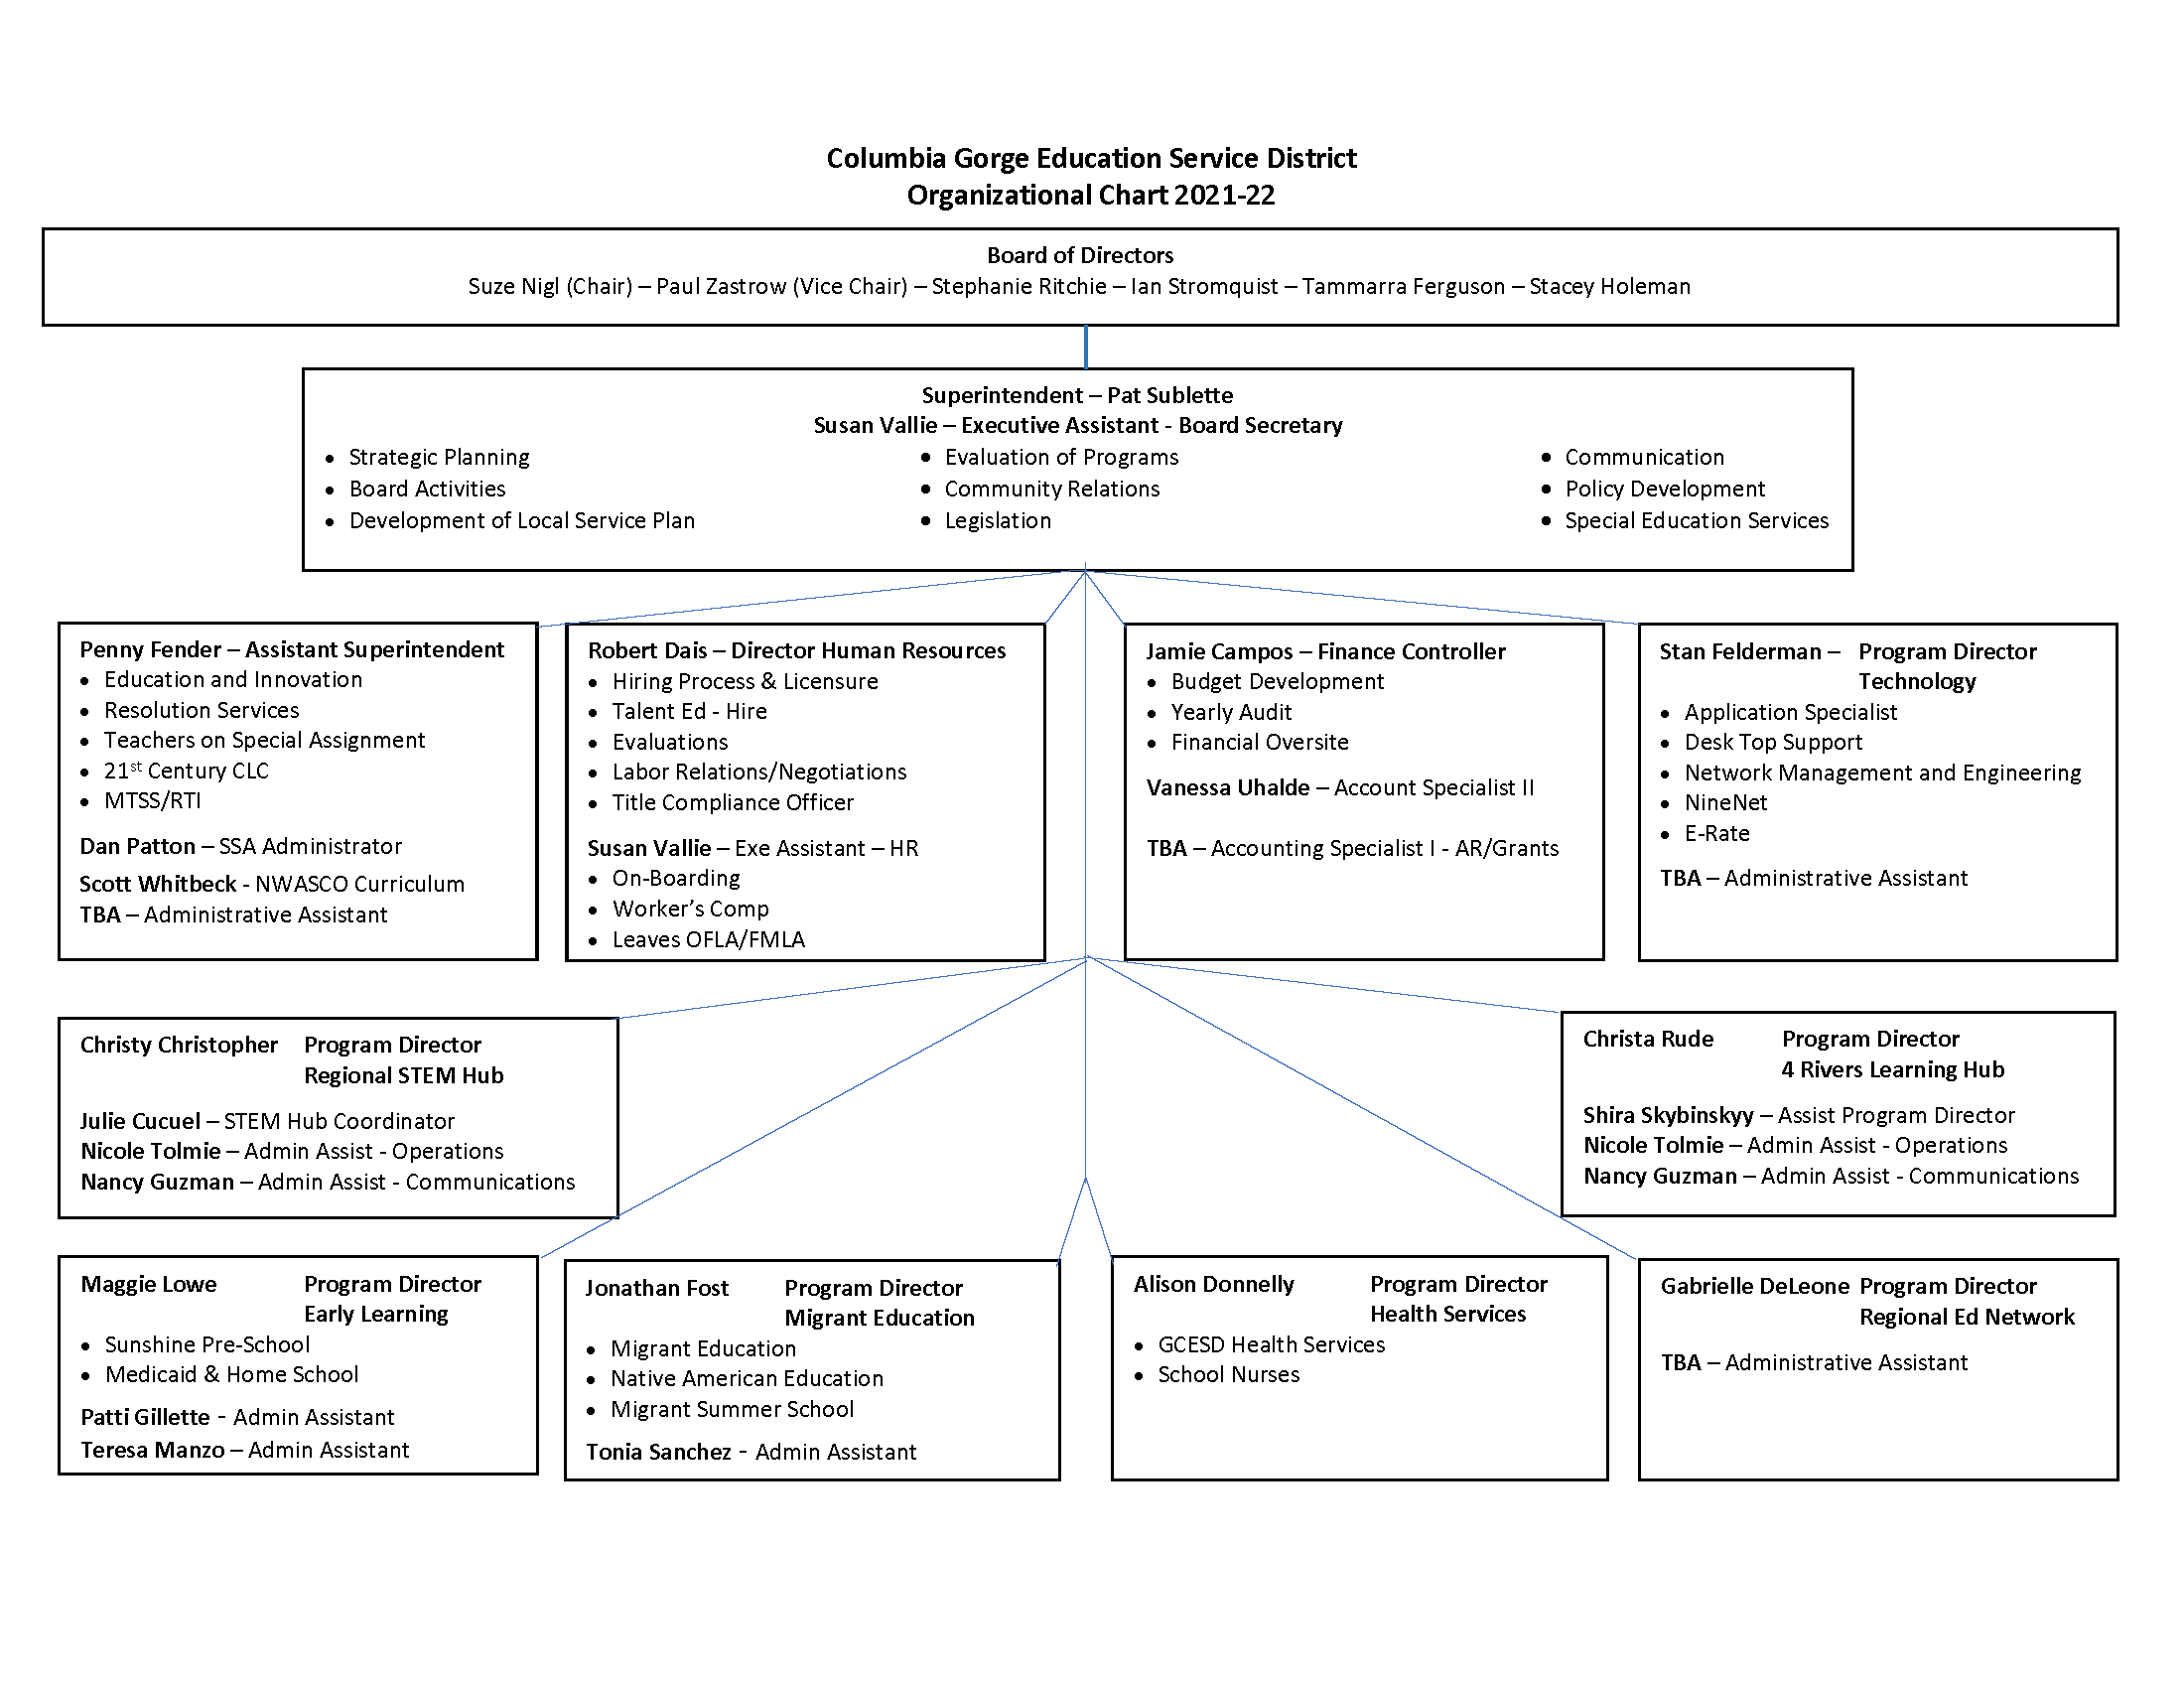 COlumbia Gorge ESD Organizational Chart